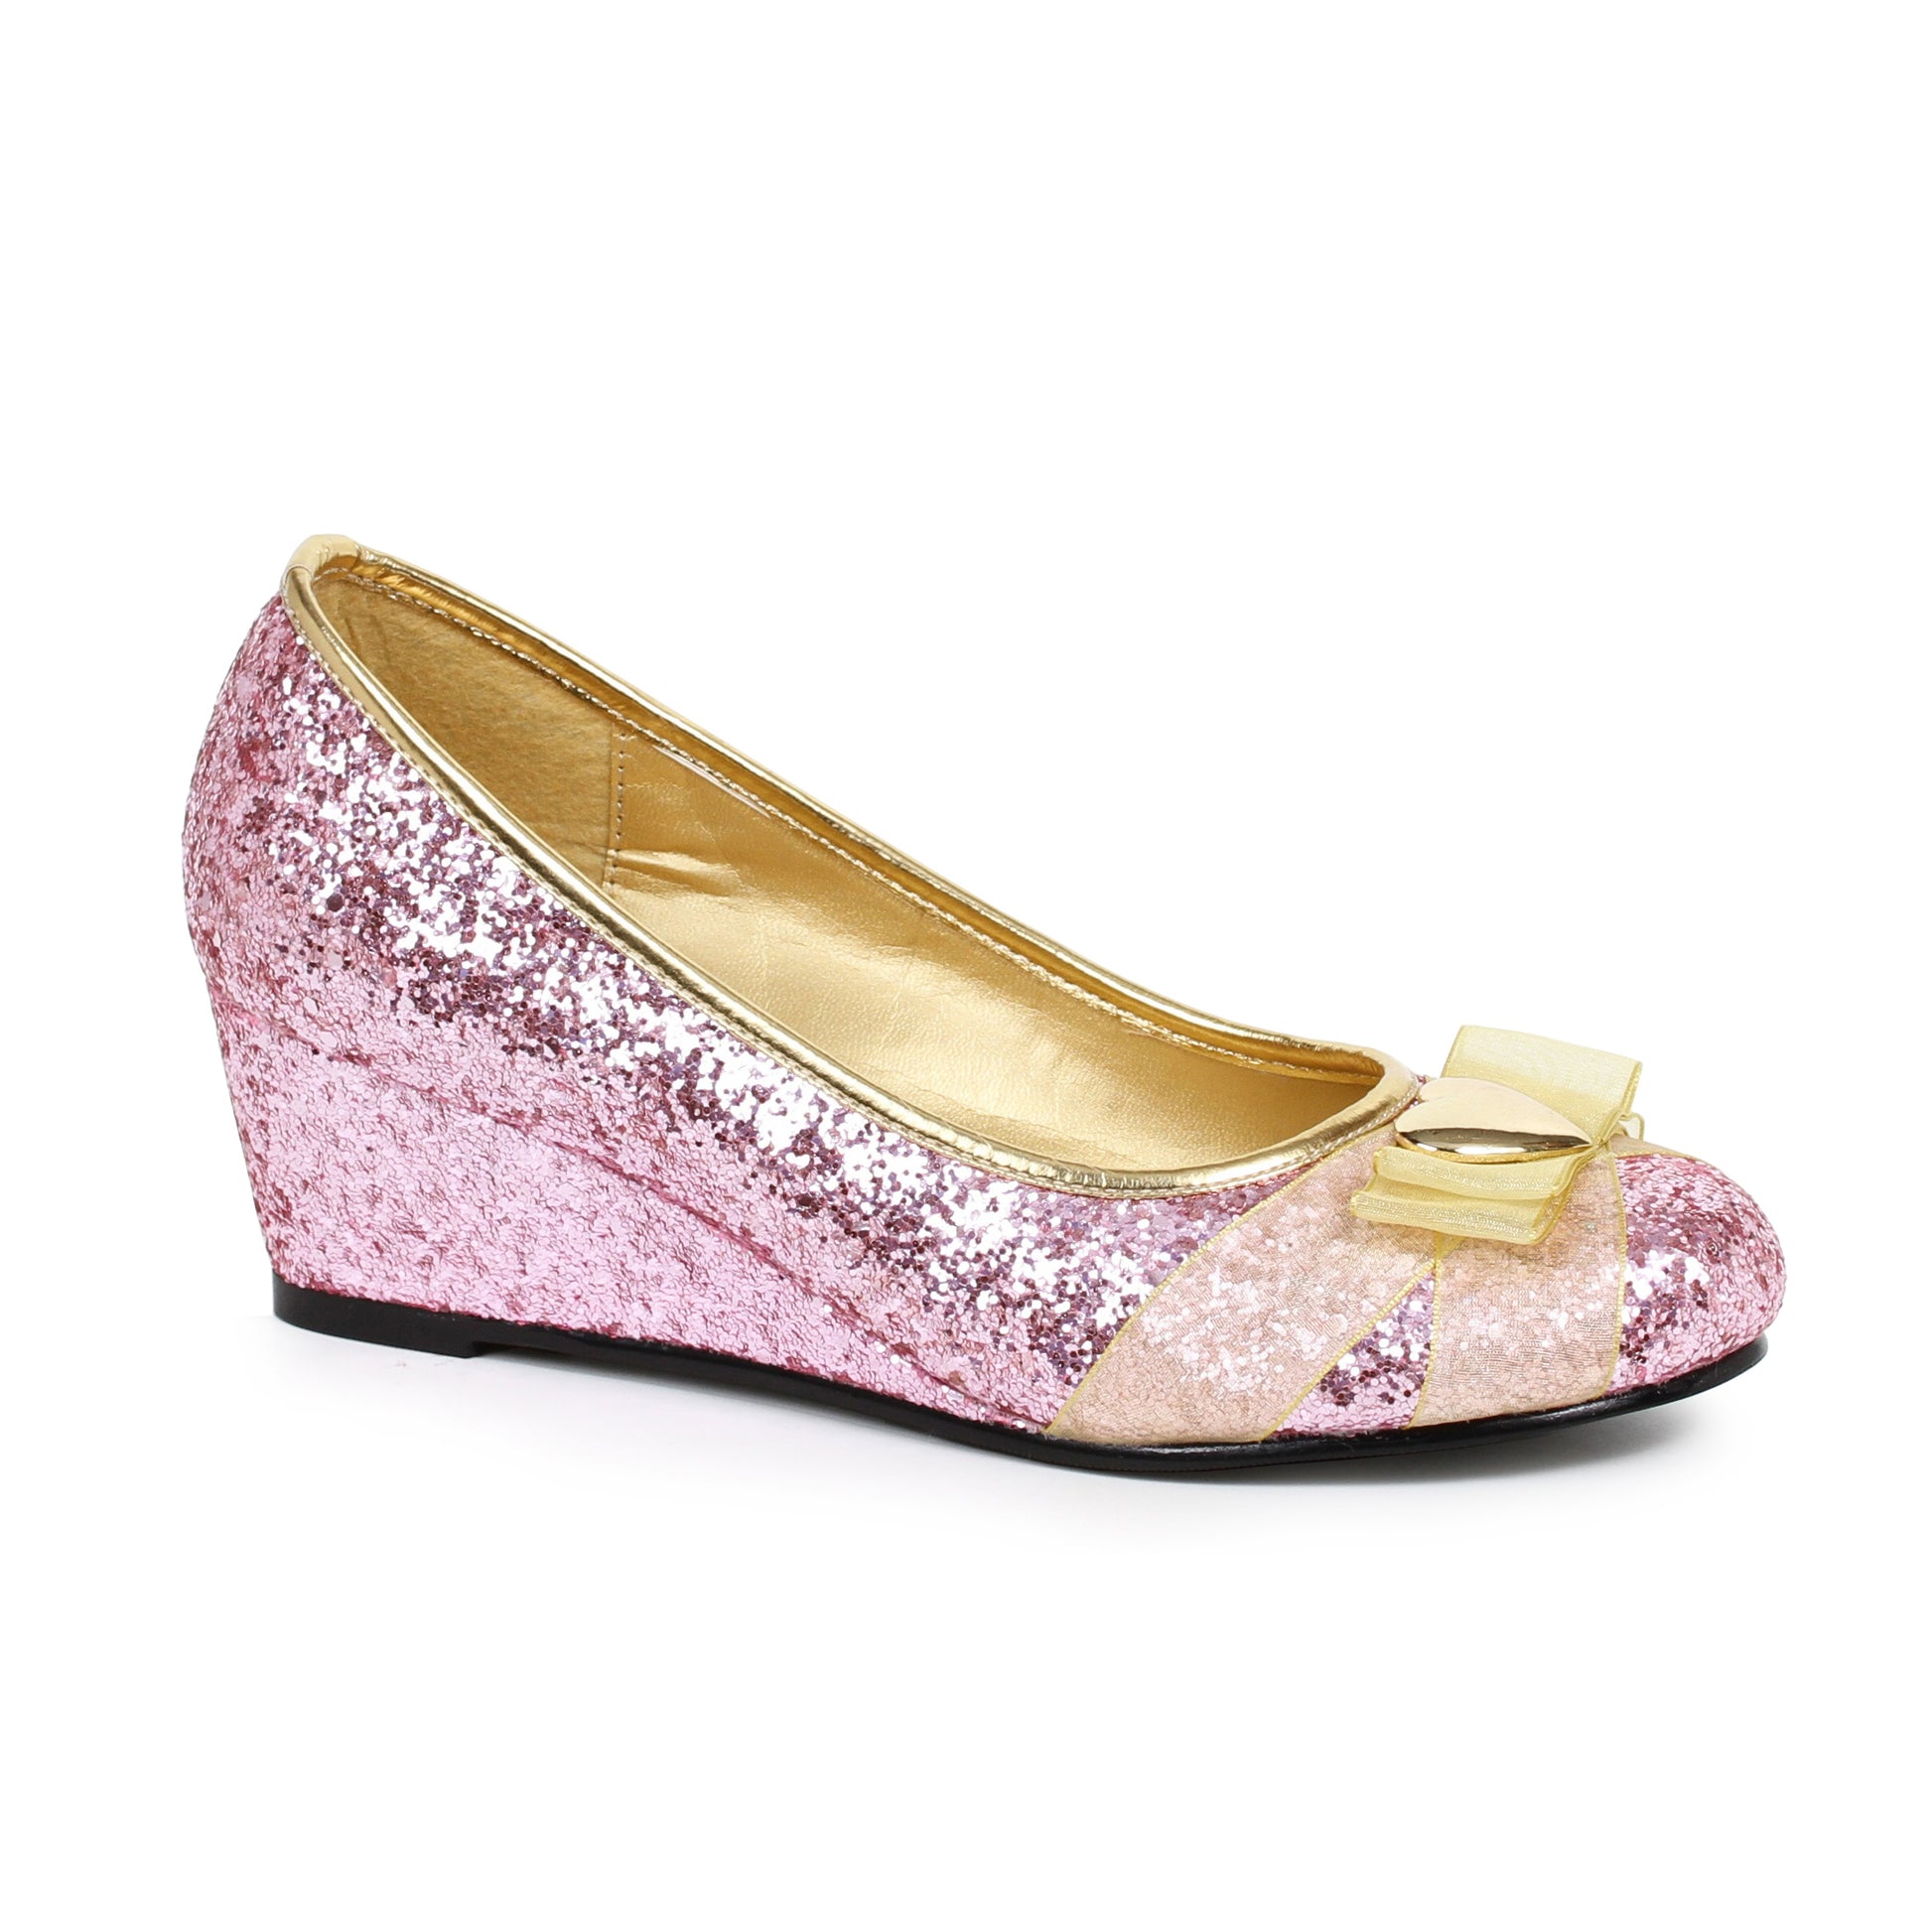 018-PRINCESS Ellie Shoes Women's Glitter Princess Shoe with Heart décor 2 INCH HEEL